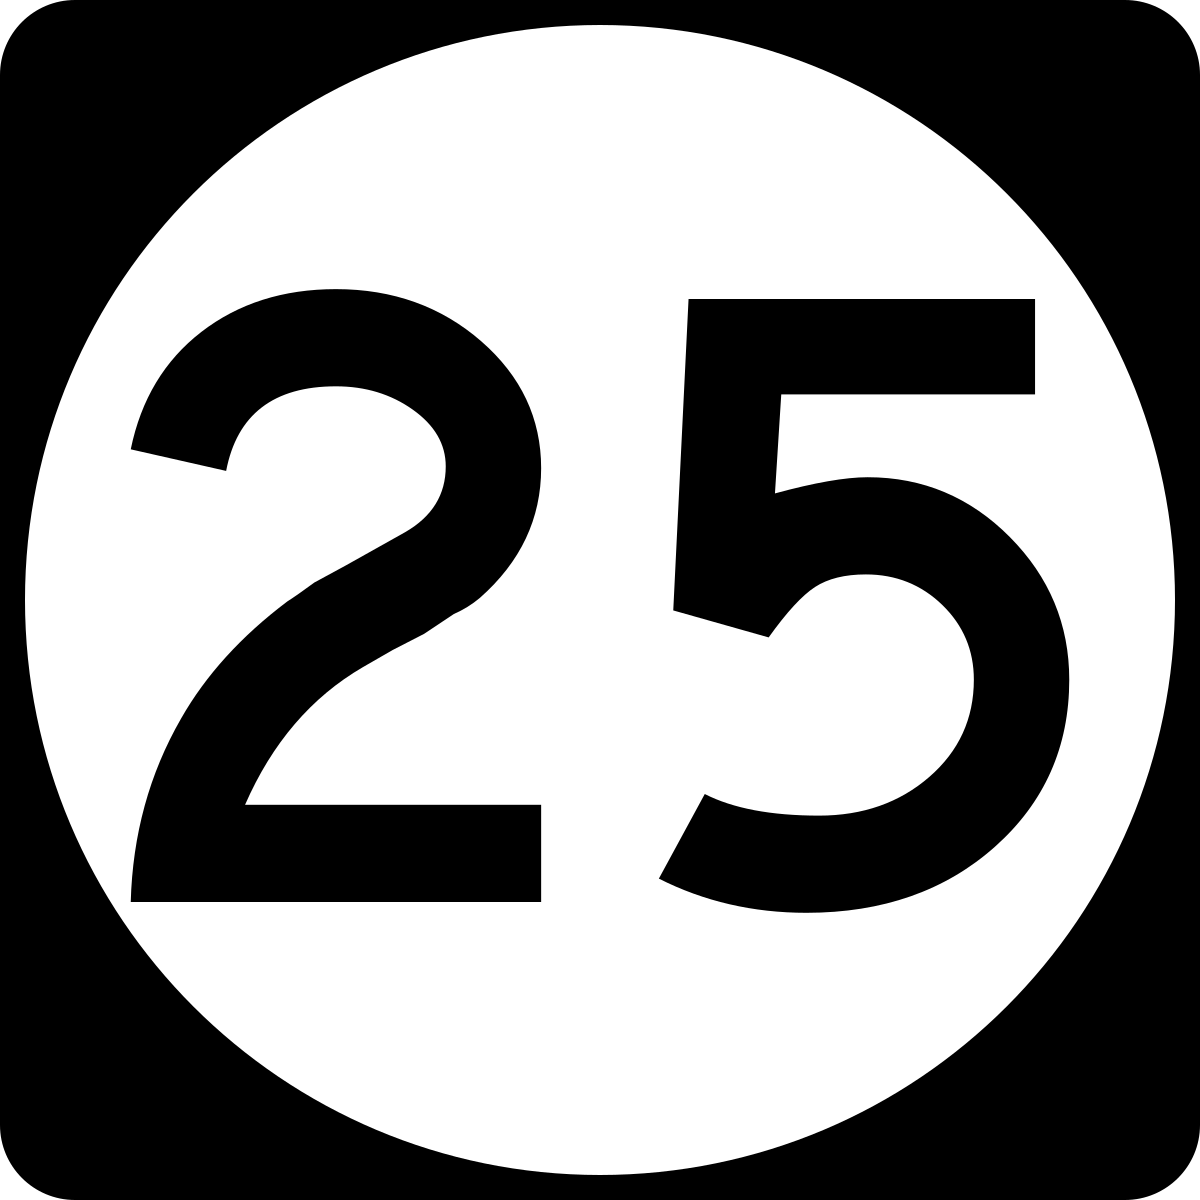 File:Circle sign 25.svg - Wikipedia